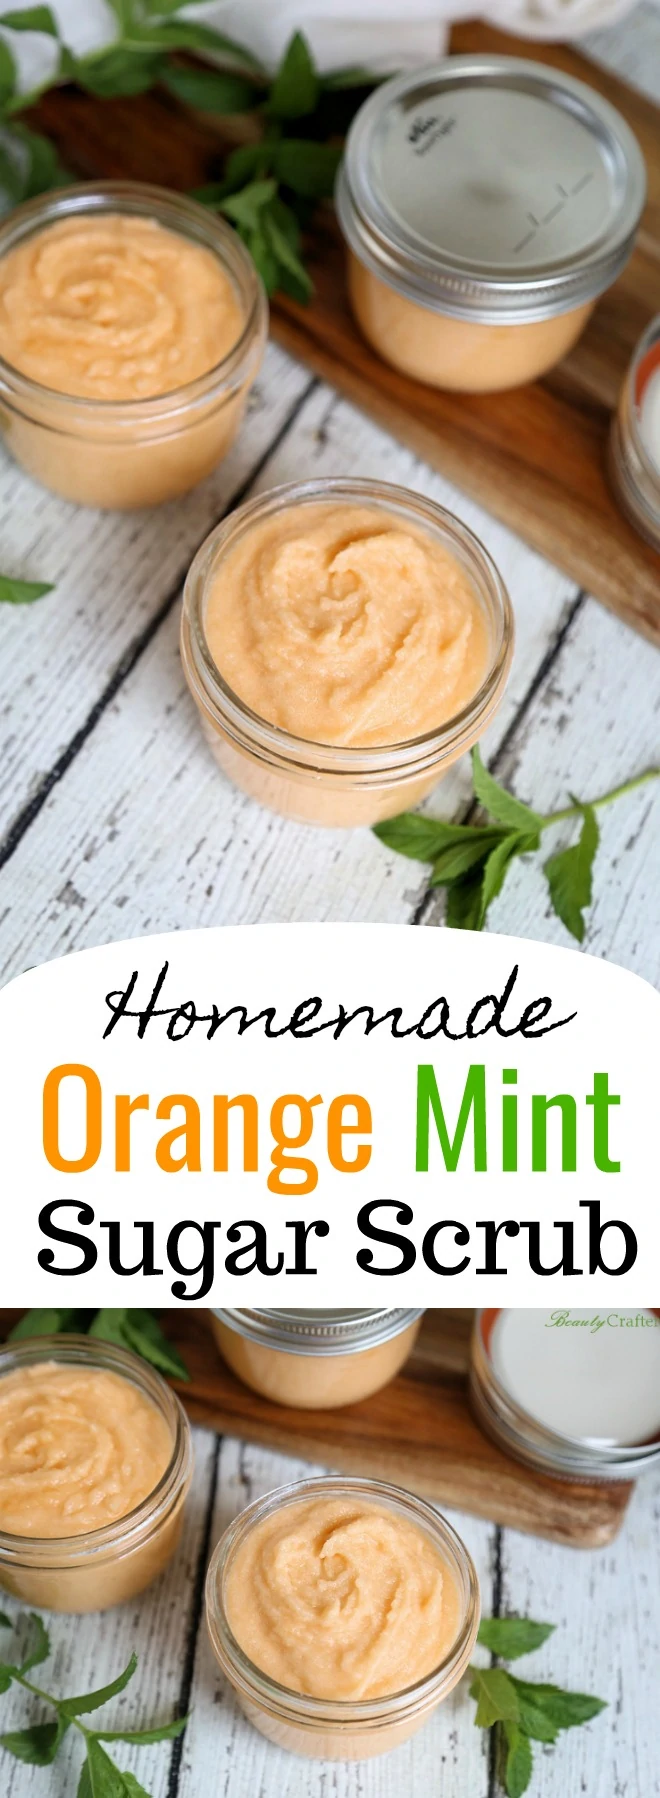 Orange Mint Sugar Scrub Recipe - Easy Homemade Gift Idea